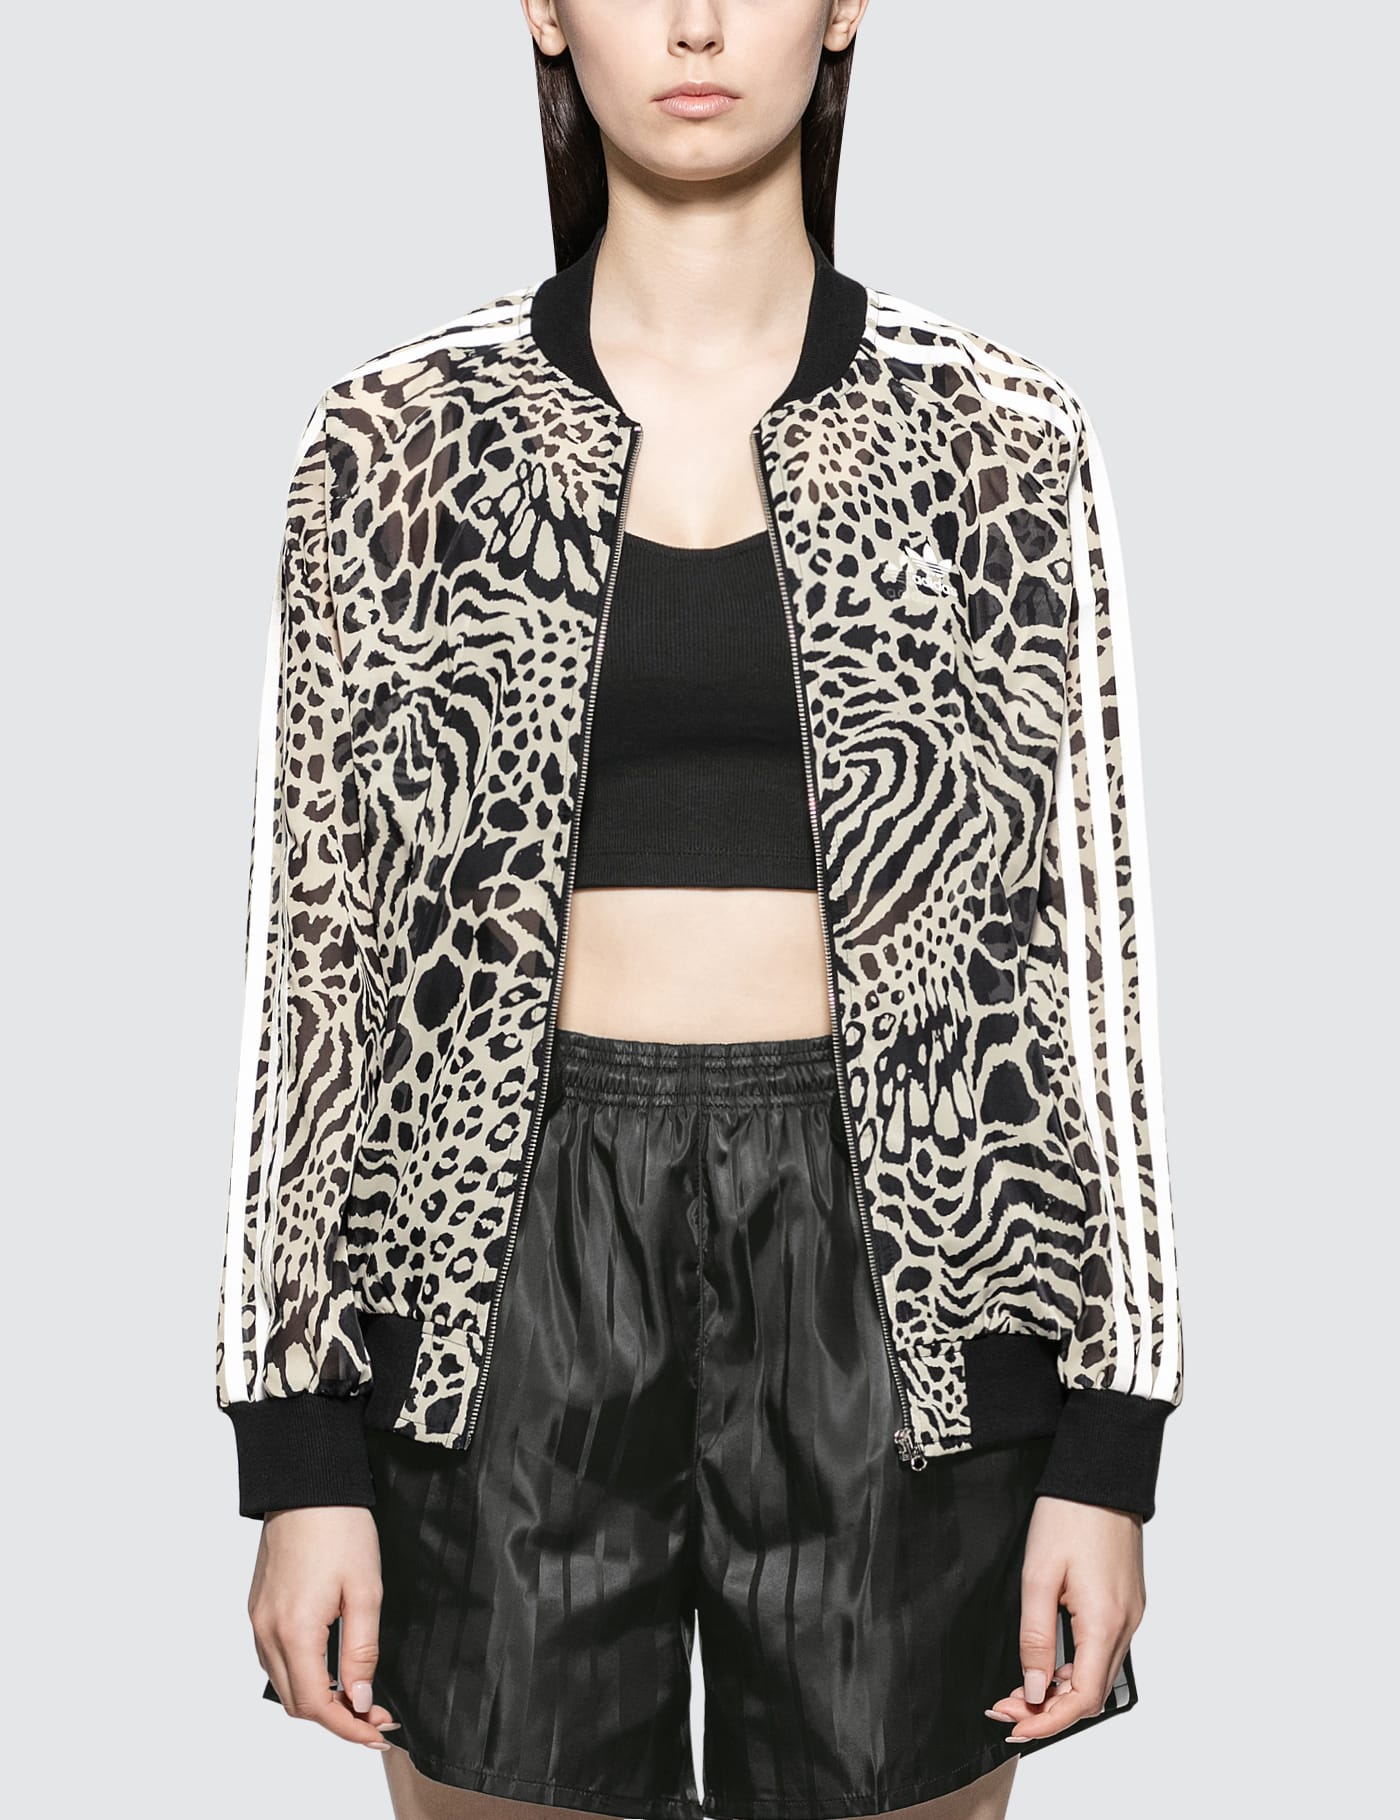 adidas leopard print jacket